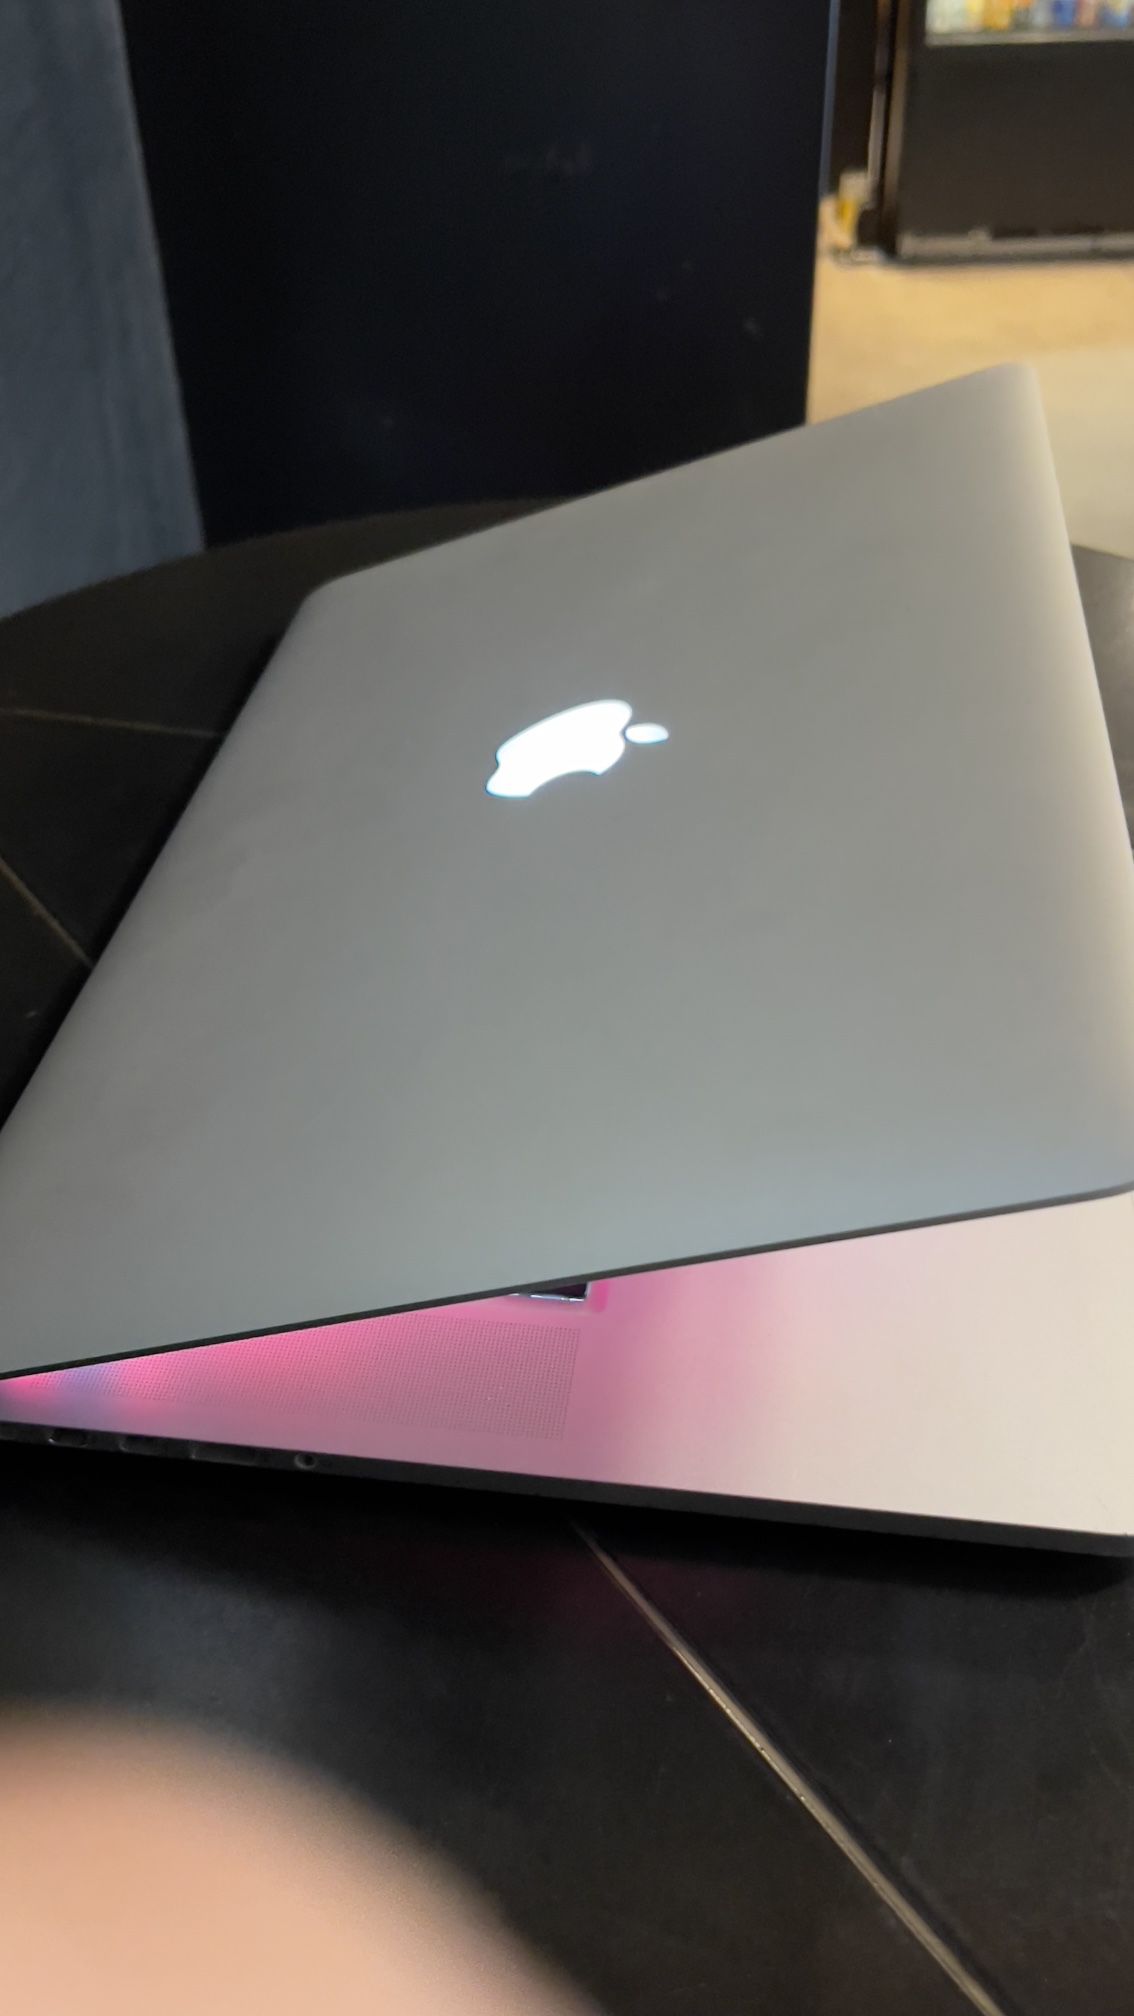 MacBook Pro 15” Retina Core I7, 16Gb 256Gn Ssd $400